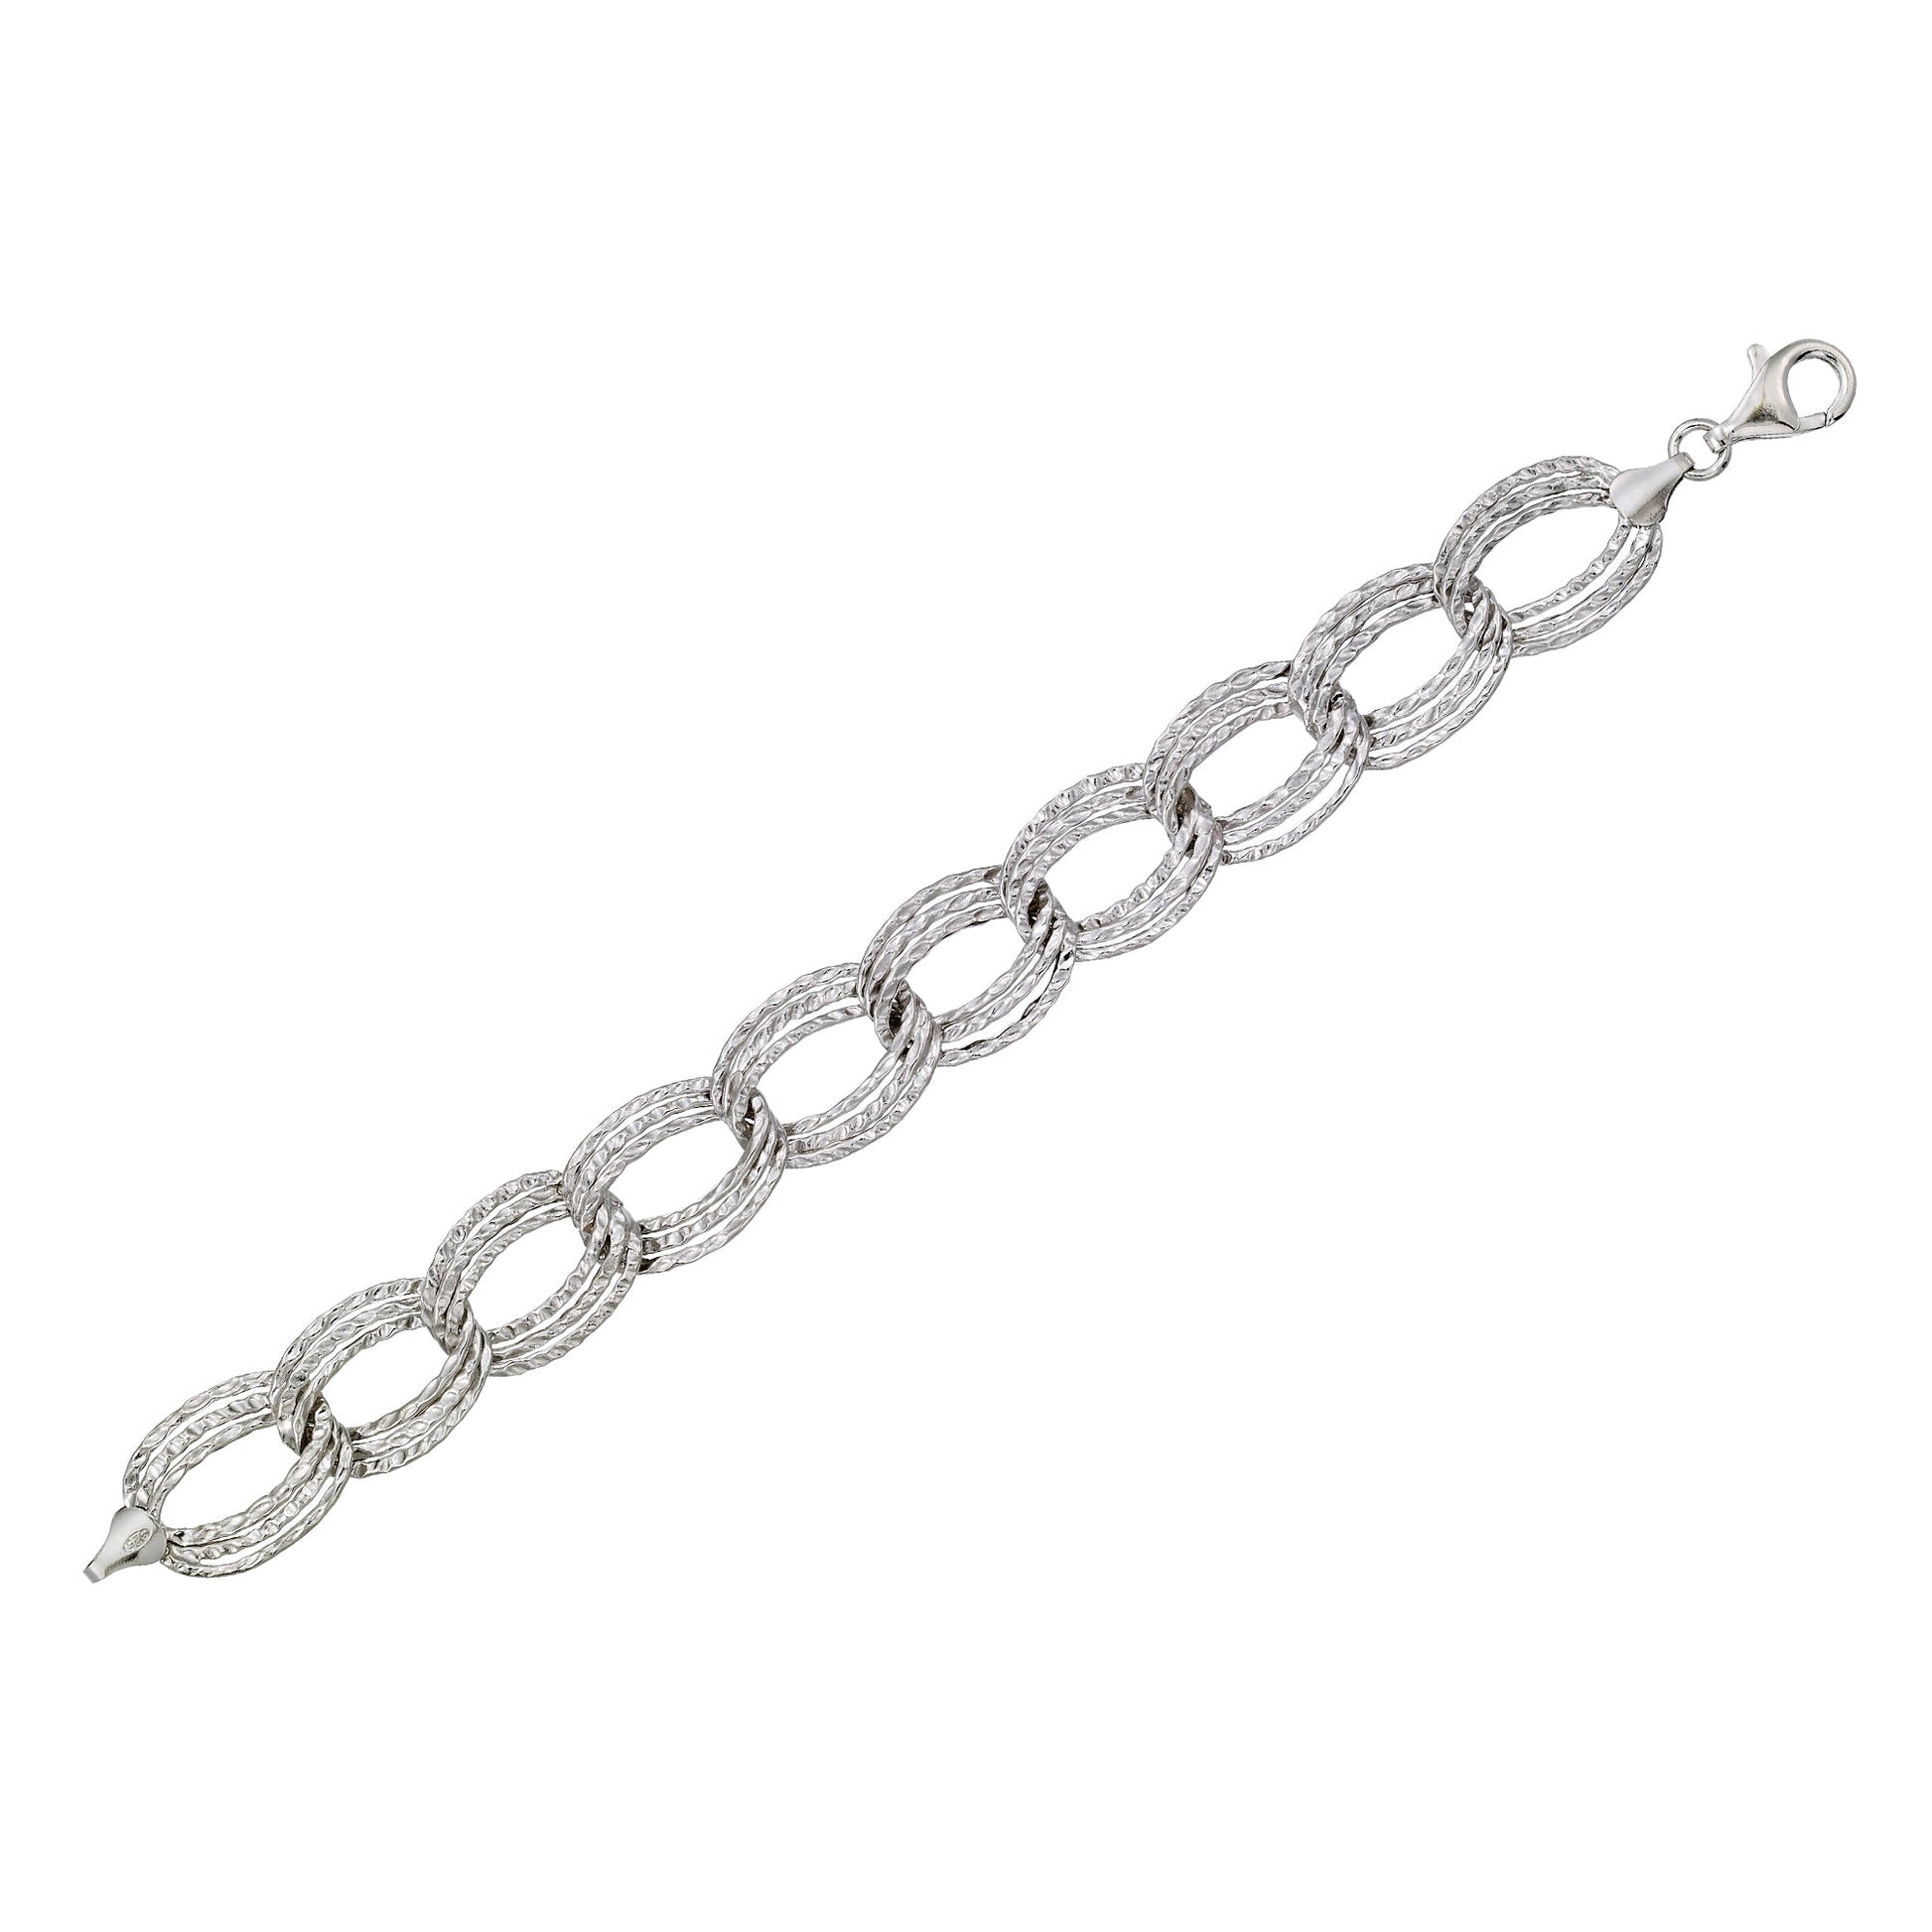 Franco Stellari Italian Sterling Silver Textured Triple Link Bracelet, 7.5"